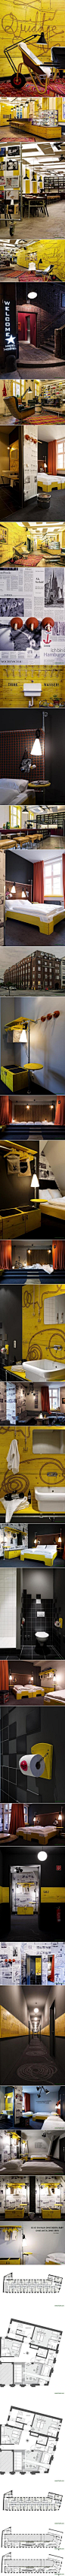 【Superbude 2 酒店】Dreimeta Armin Fischer 设计，位于德国。九十个房间最多可以容纳二百七十位旅客，厨房，自助餐厅，酒吧，个性化的家俱，与酒店的室内环境合为一体,相得益彰。http://bit.ly/17NiwCl